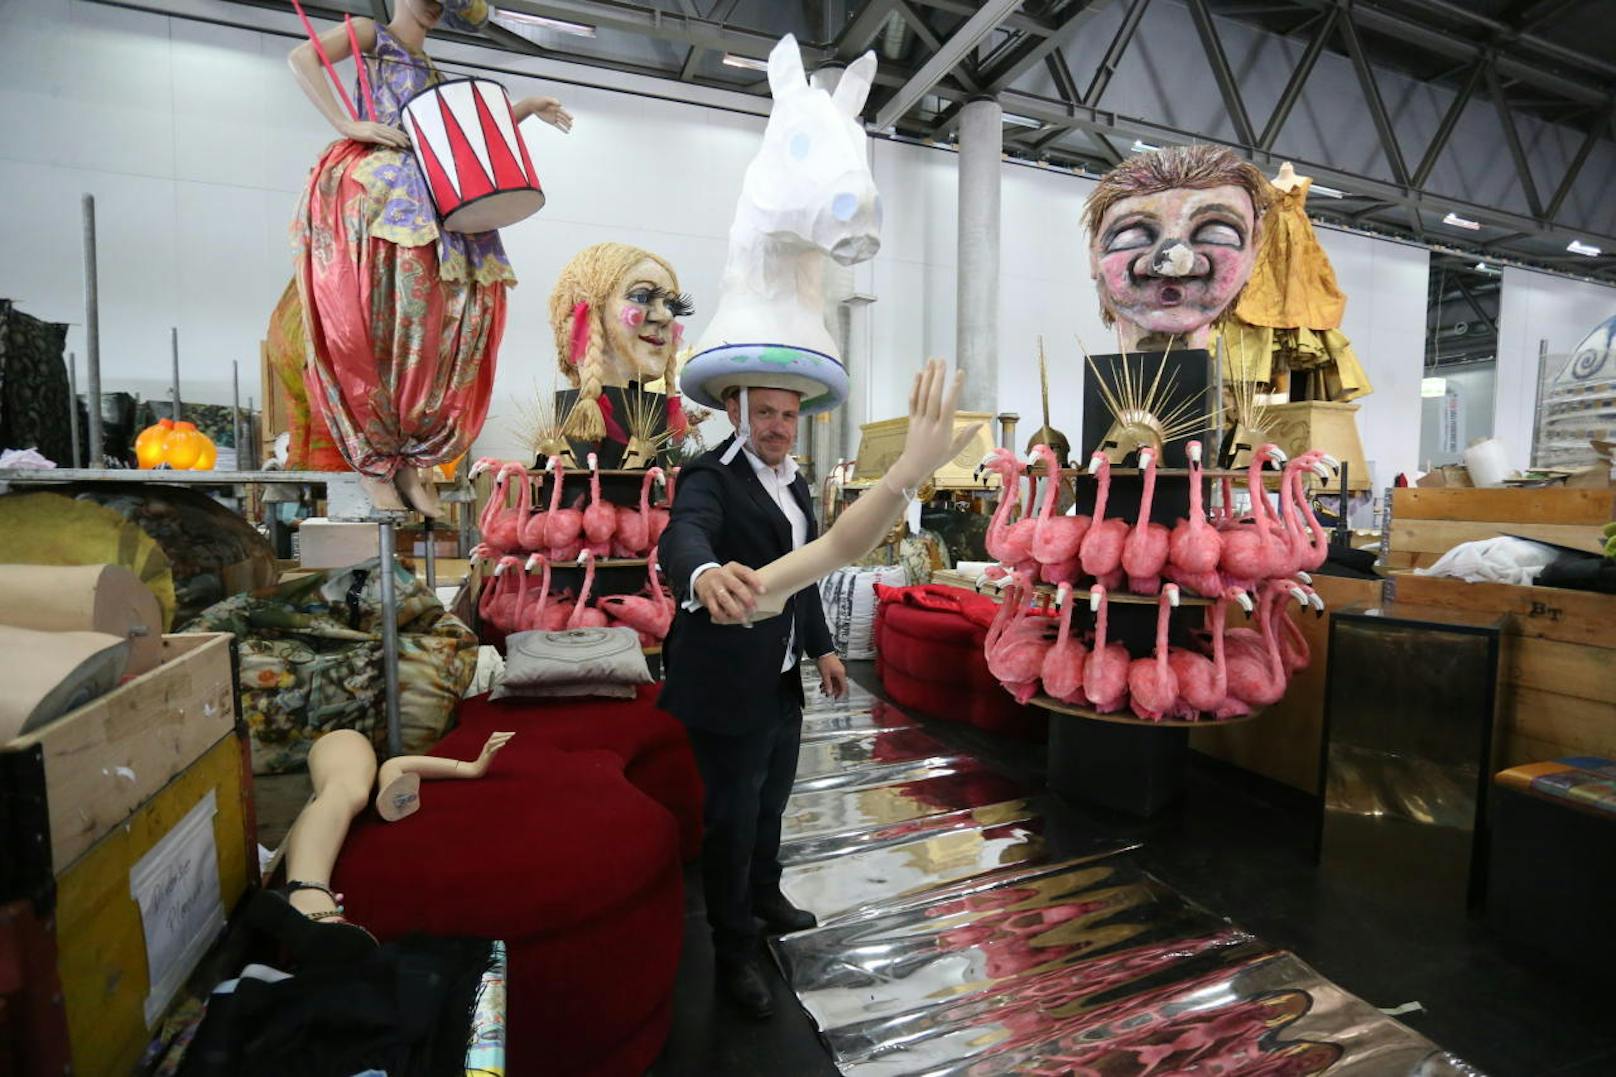 Kostüme, Kondome, Kulissen: Echte Unikate aus 26 Jahren kann man bis 27. Oktober in der Messe Wien beim Life Ball Flohmarkt ergattern! Ball-Vater Gery Keszler: "Der Erlös geht an HIV-positive Menschen."